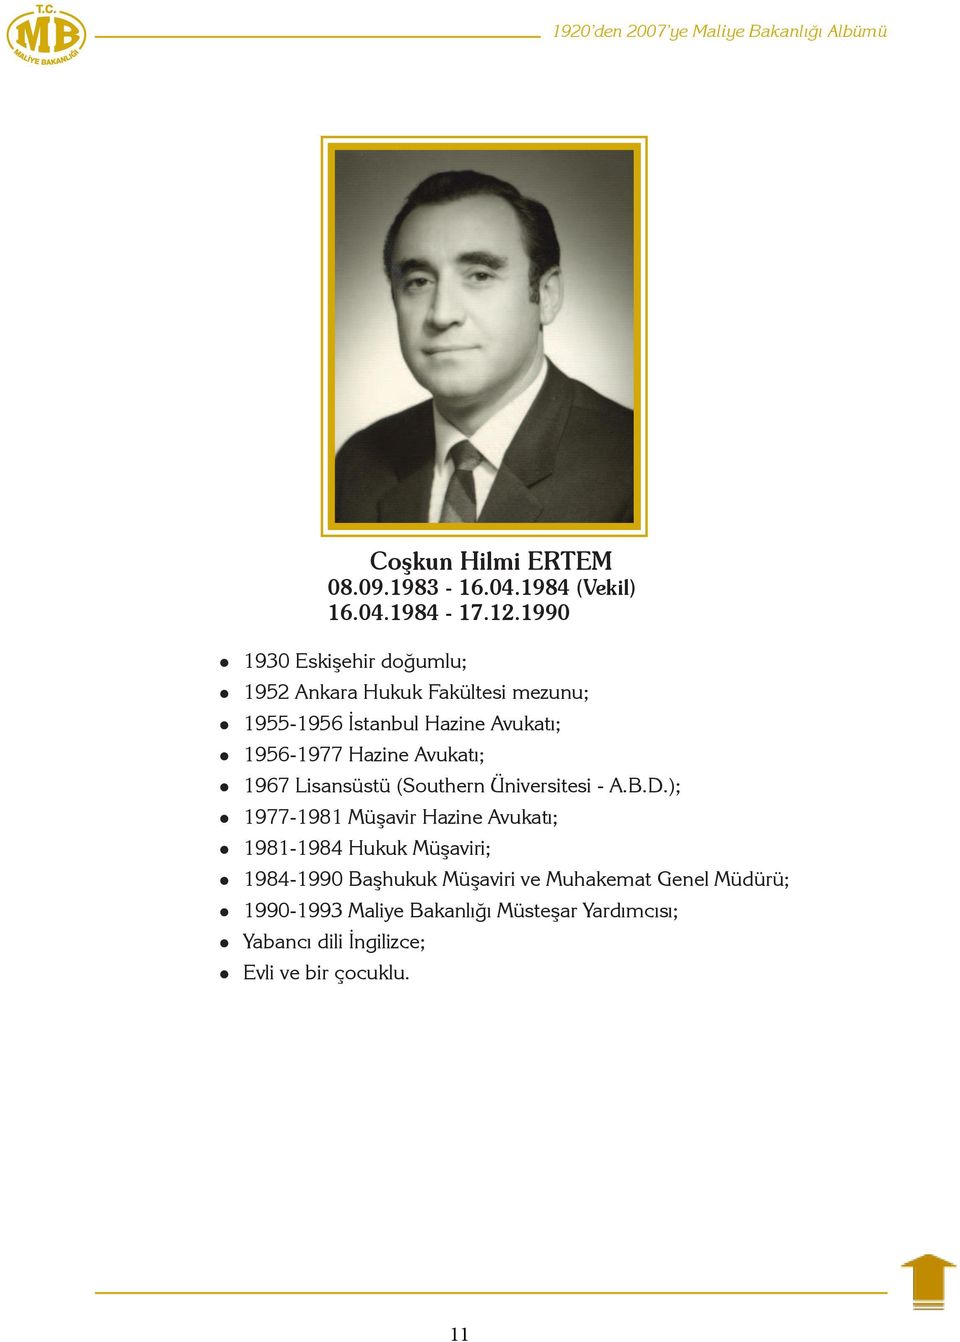 Avukatı; 1967 Lisansüstü (Southern Üniversitesi - A.B.D.